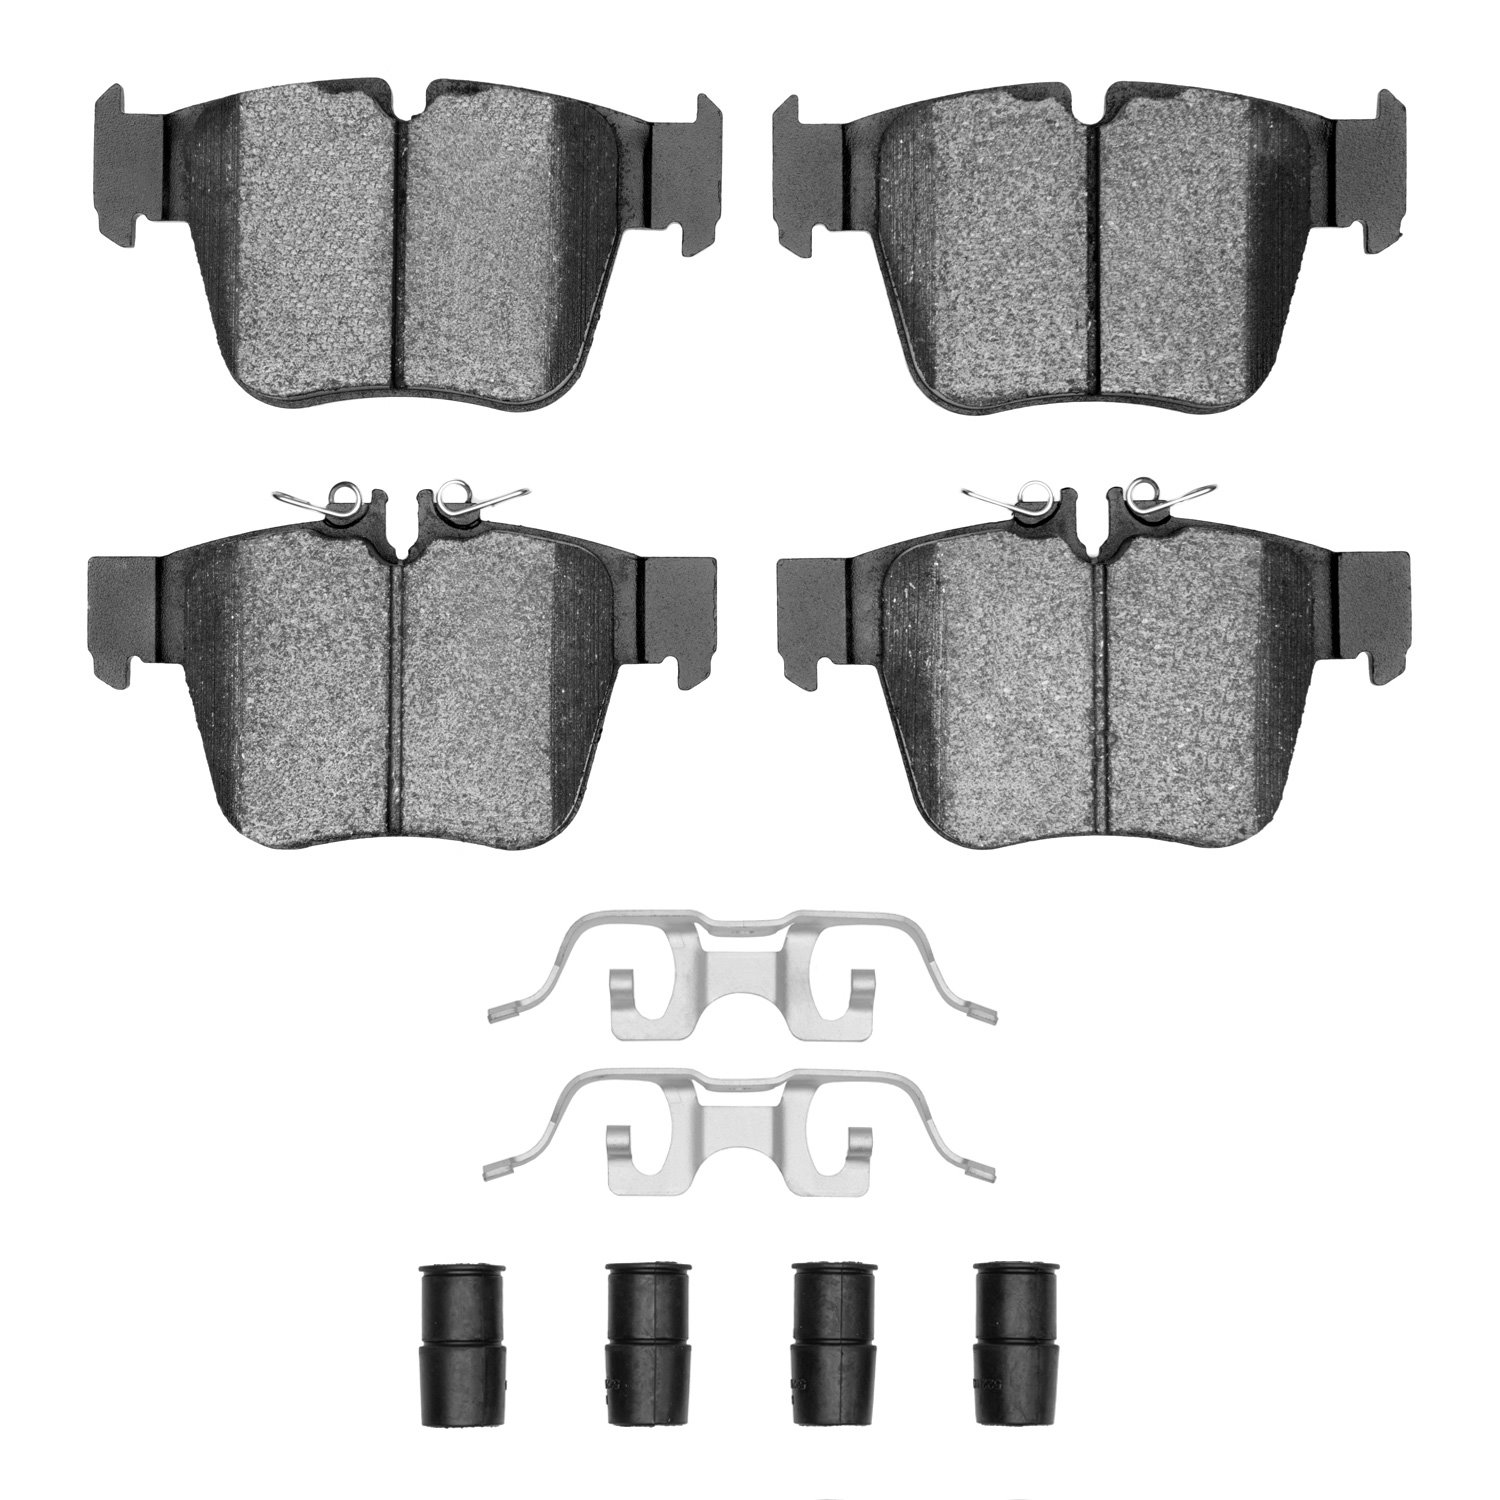 1552-1872-01 5000 Advanced Low-Metallic Brake Pads & Hardware Kit, Fits Select Mercedes-Benz, Position: Rear